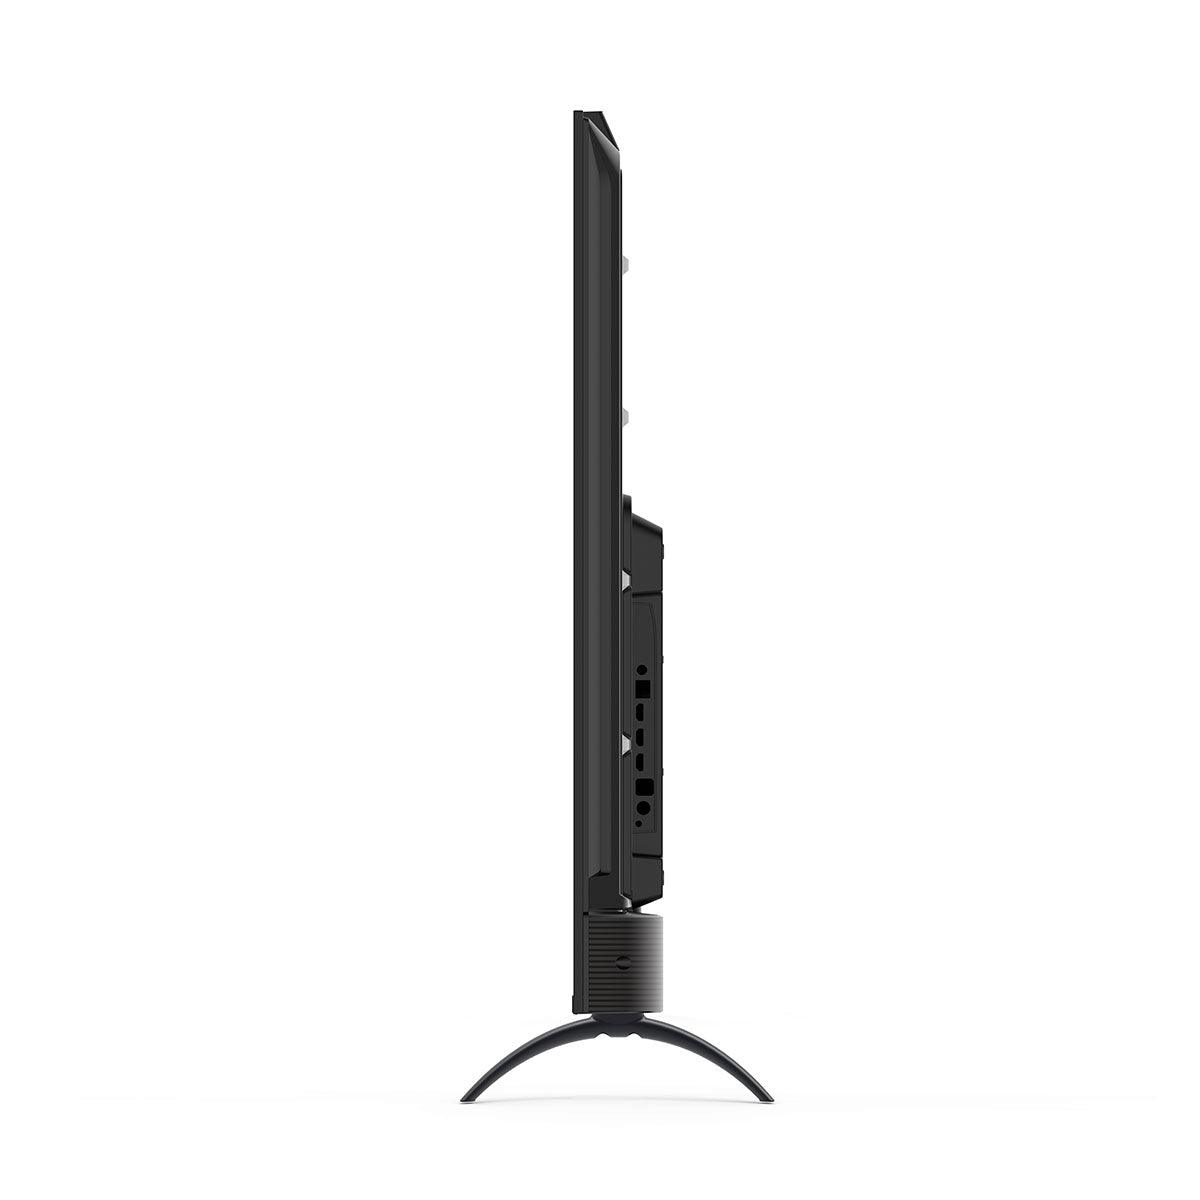 AIWA 165 CMS (65 Inch) 4K Ultra HD QLED Google TV Powered by Android 11, Netflix, YouTube, CVT, MEMC, Alexa, Inbuilt Chromecast, (Black) (Model 2023) 2 Years Warranty - Global Plugin